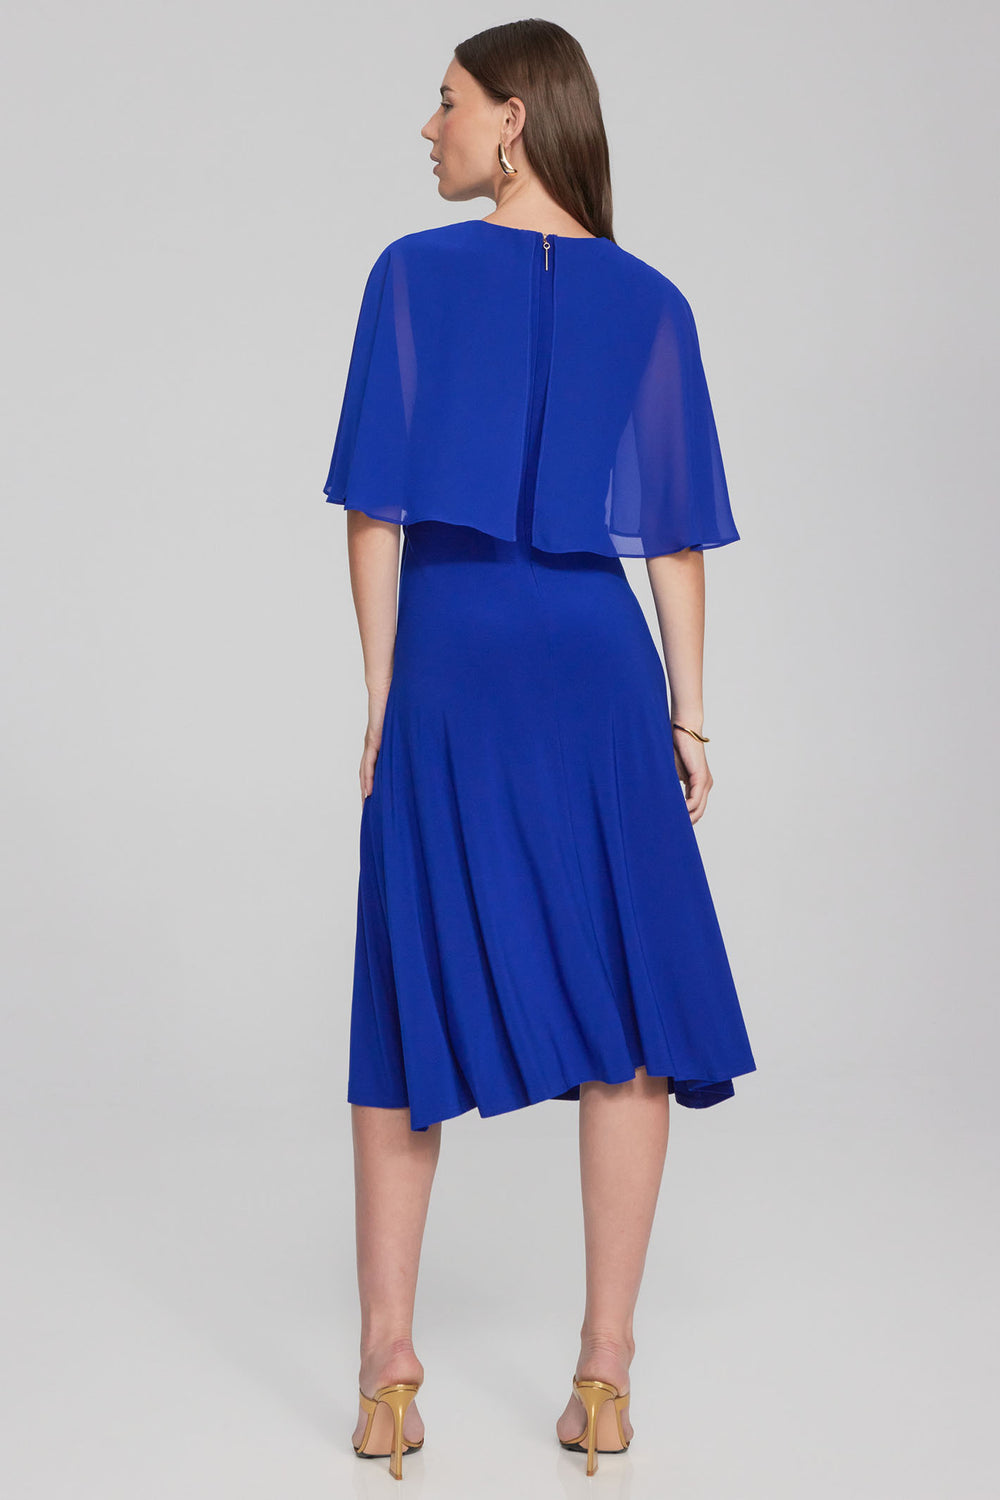 Joseph Ribkoff 231757 Royal Sapphire Blue Wrap Style Occasion Dress - Dotique Chesterfield